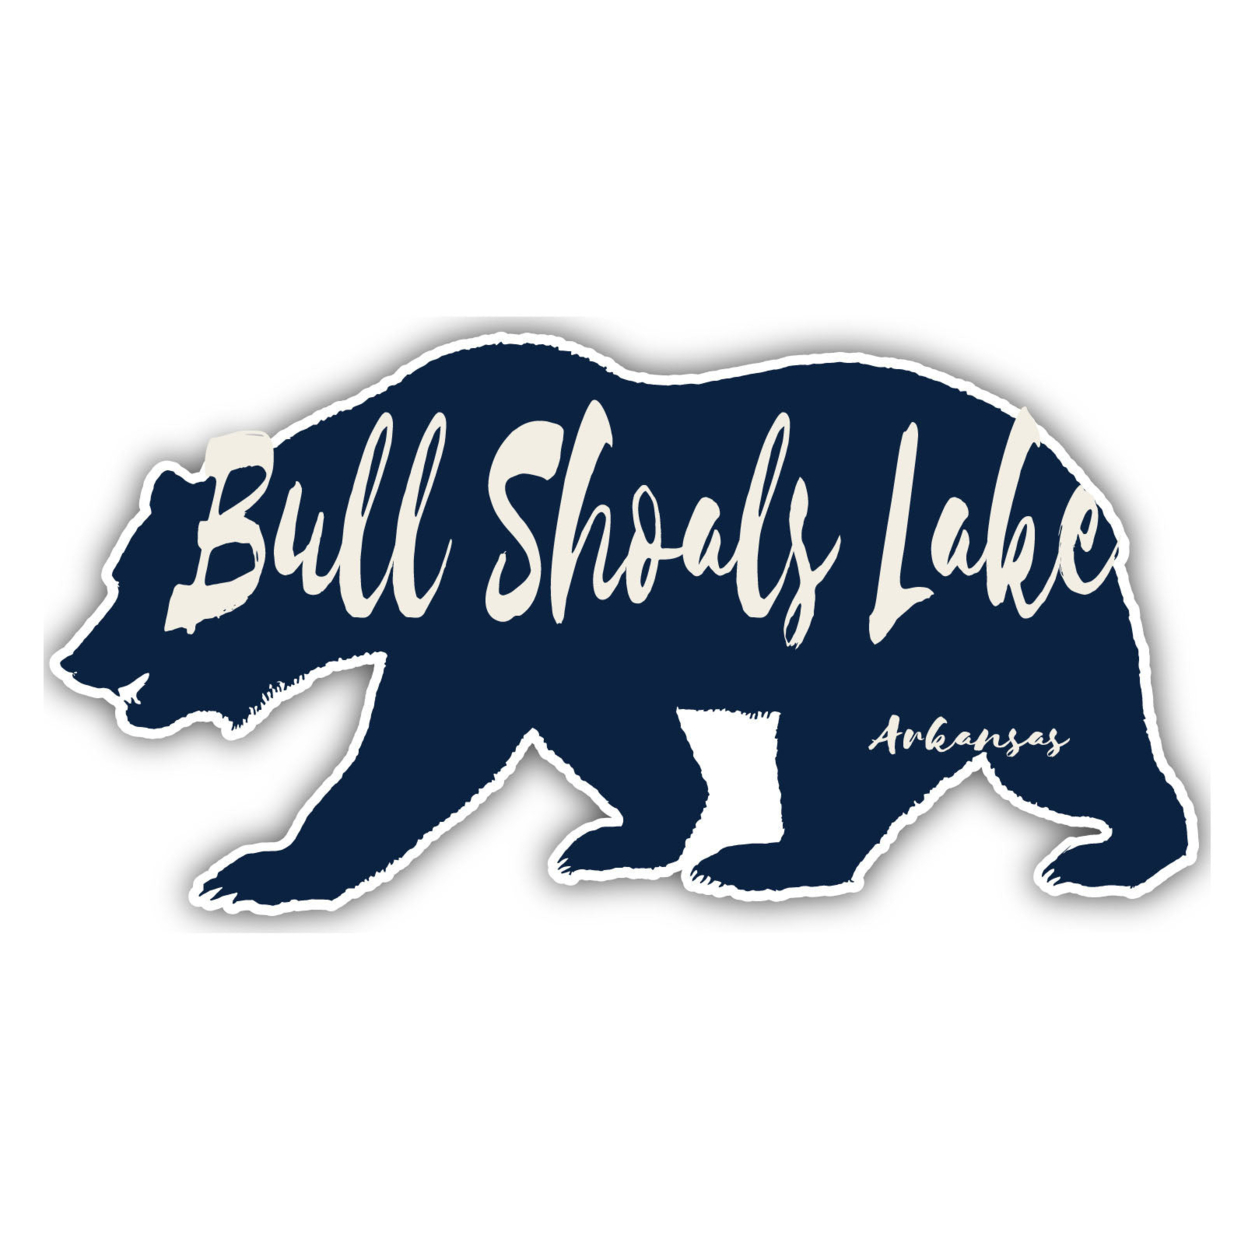 Bull Shoals Lake Arkansas Souvenir Decorative Stickers (Choose Theme And Size) - 4-Pack, 4-Inch, Tent